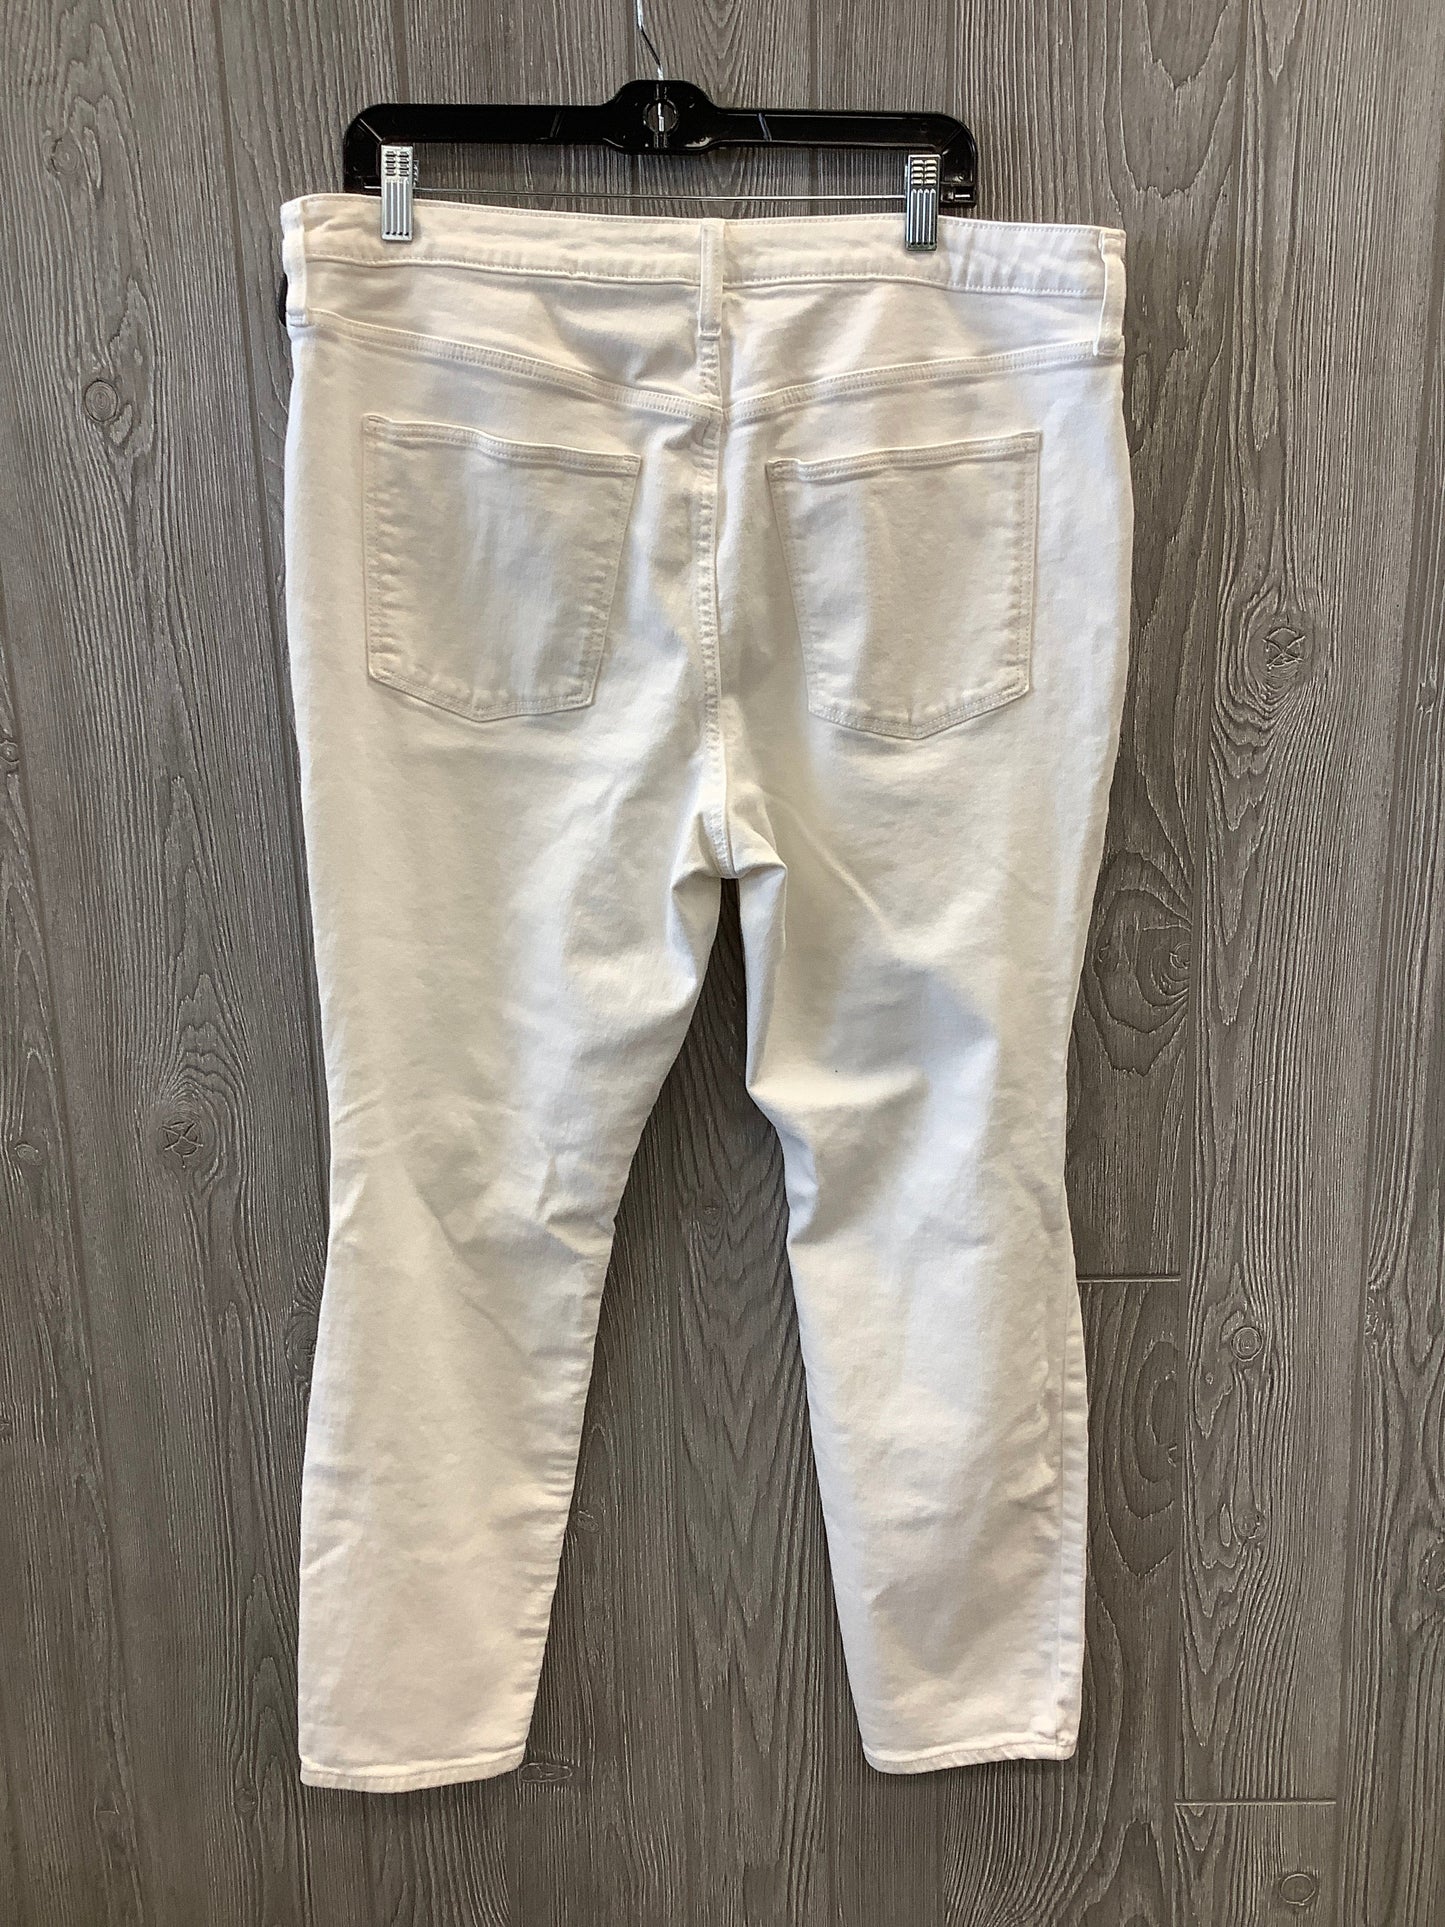 White Denim Jeans Skinny Universal Thread, Size 18